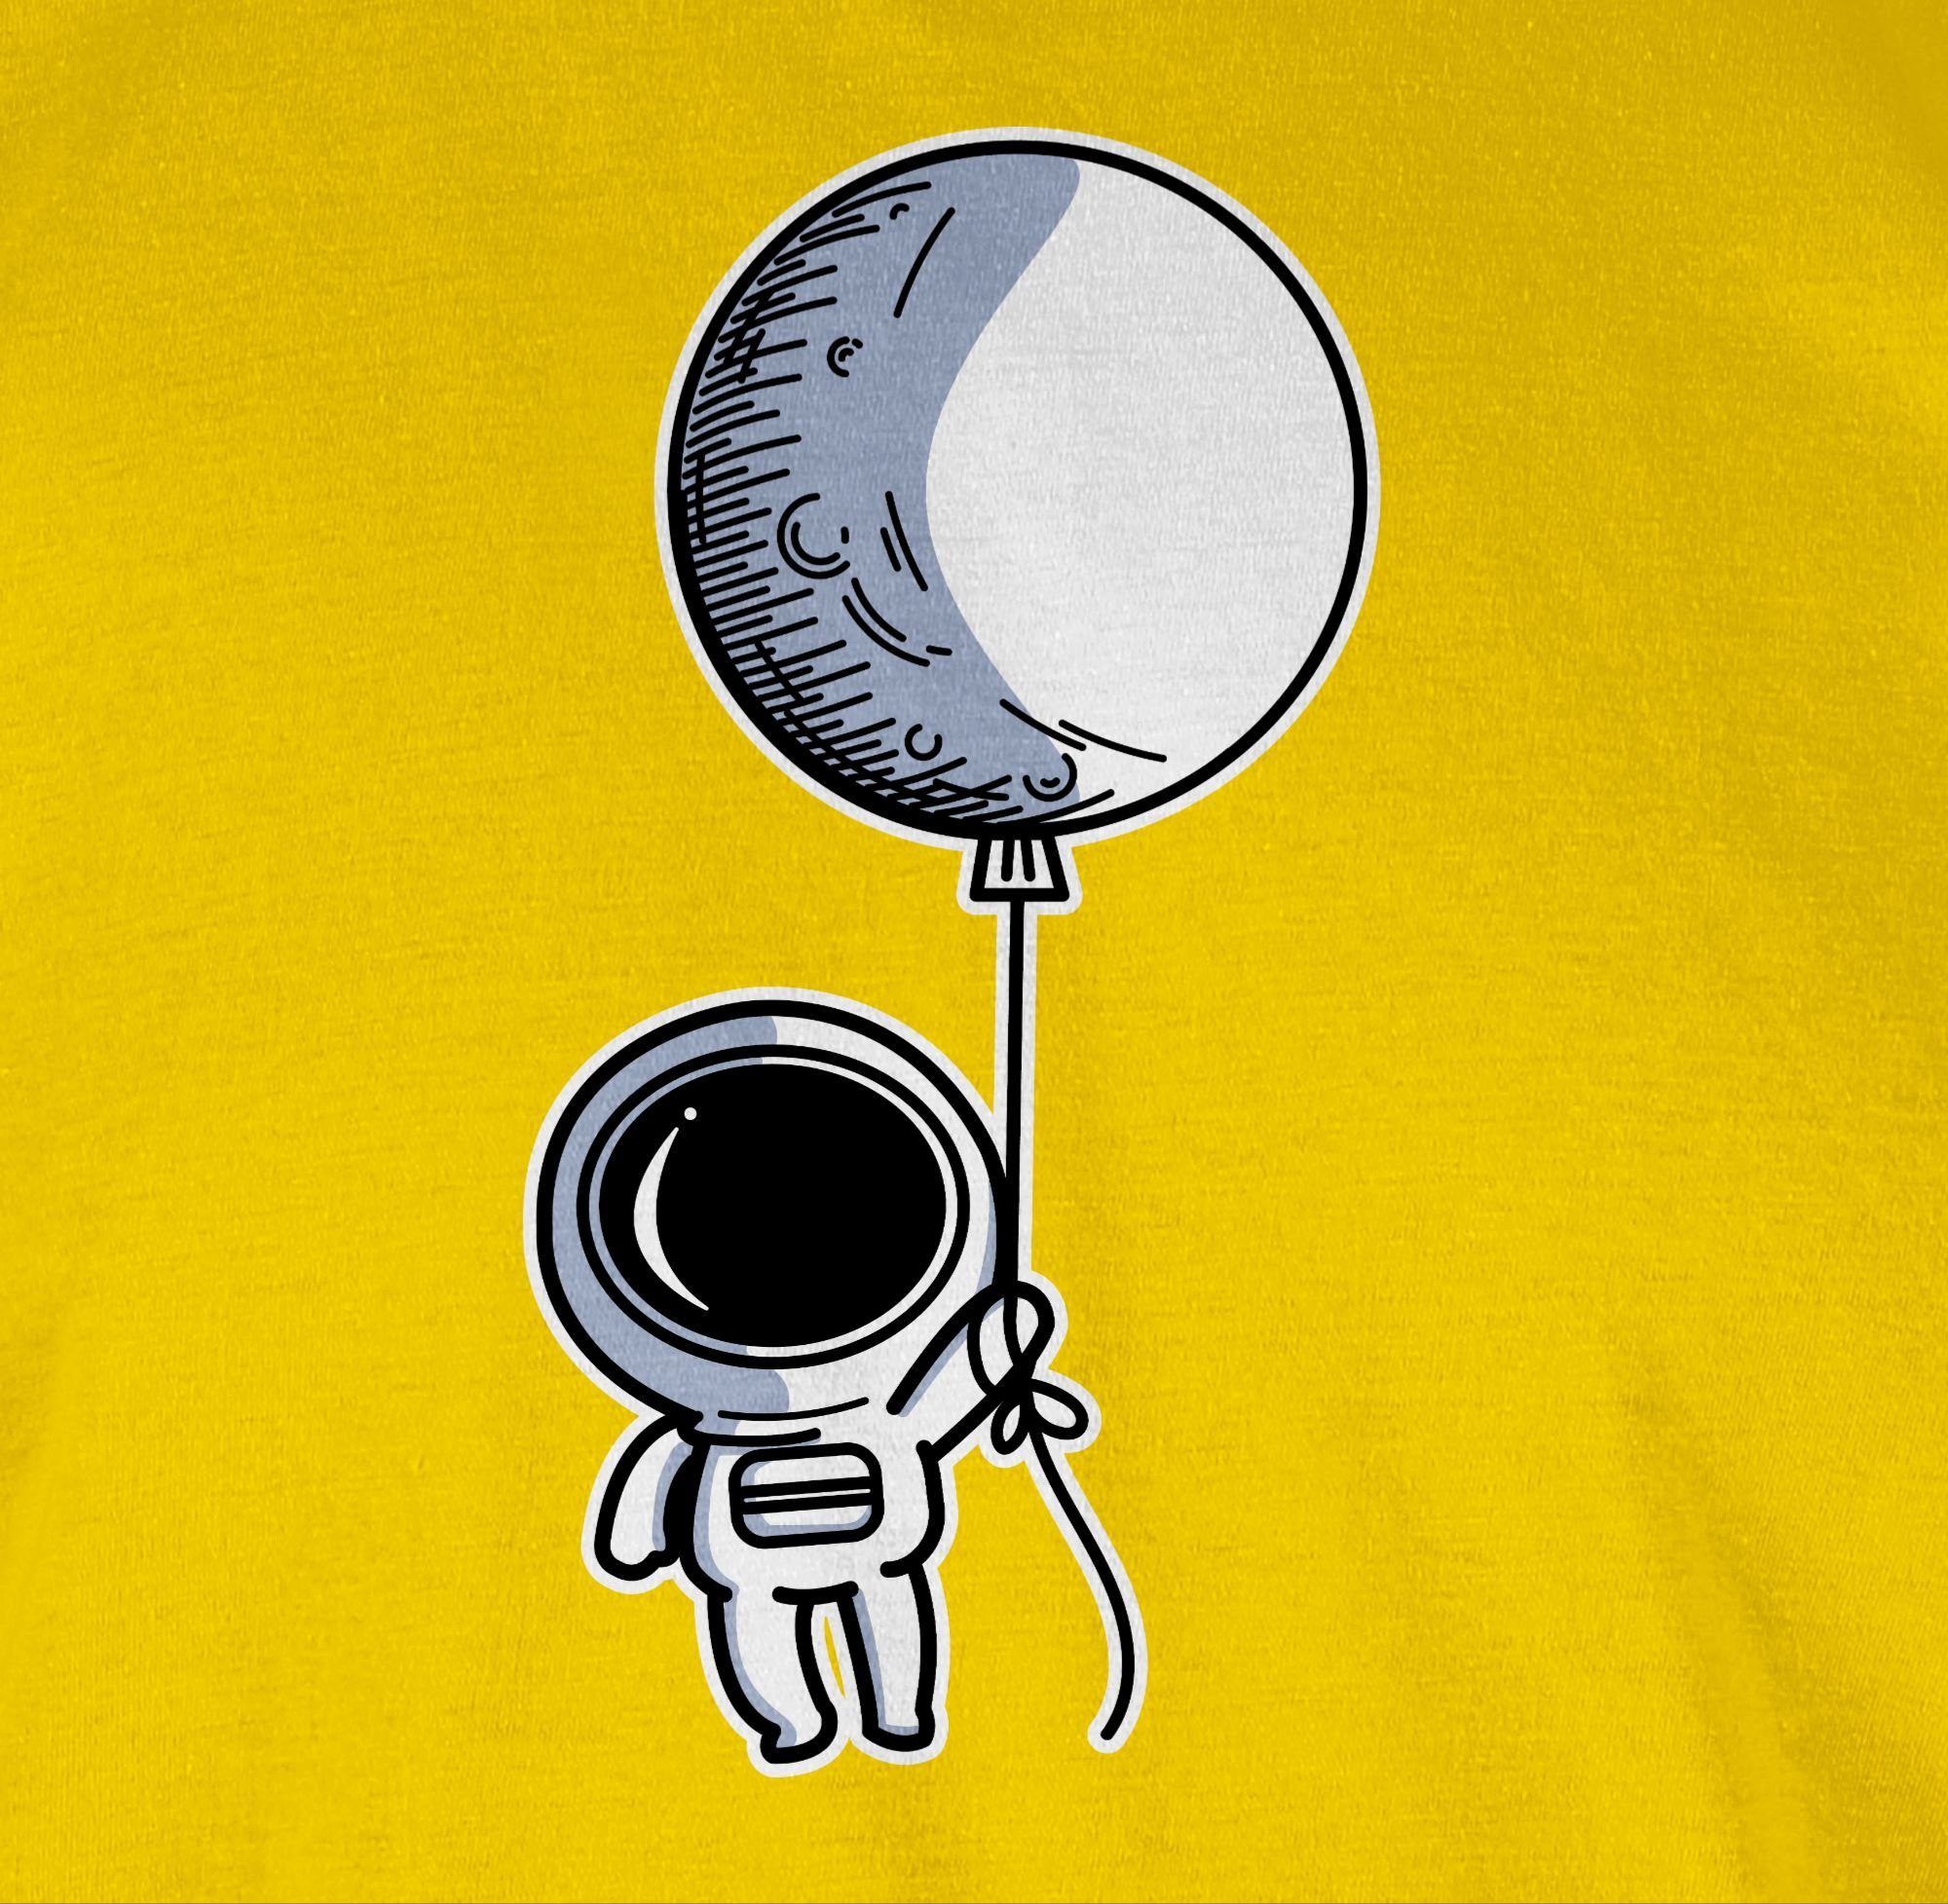 Luftballon Gelb mit Astronaut Geschenke 02 T-Shirt Nerd Shirtracer